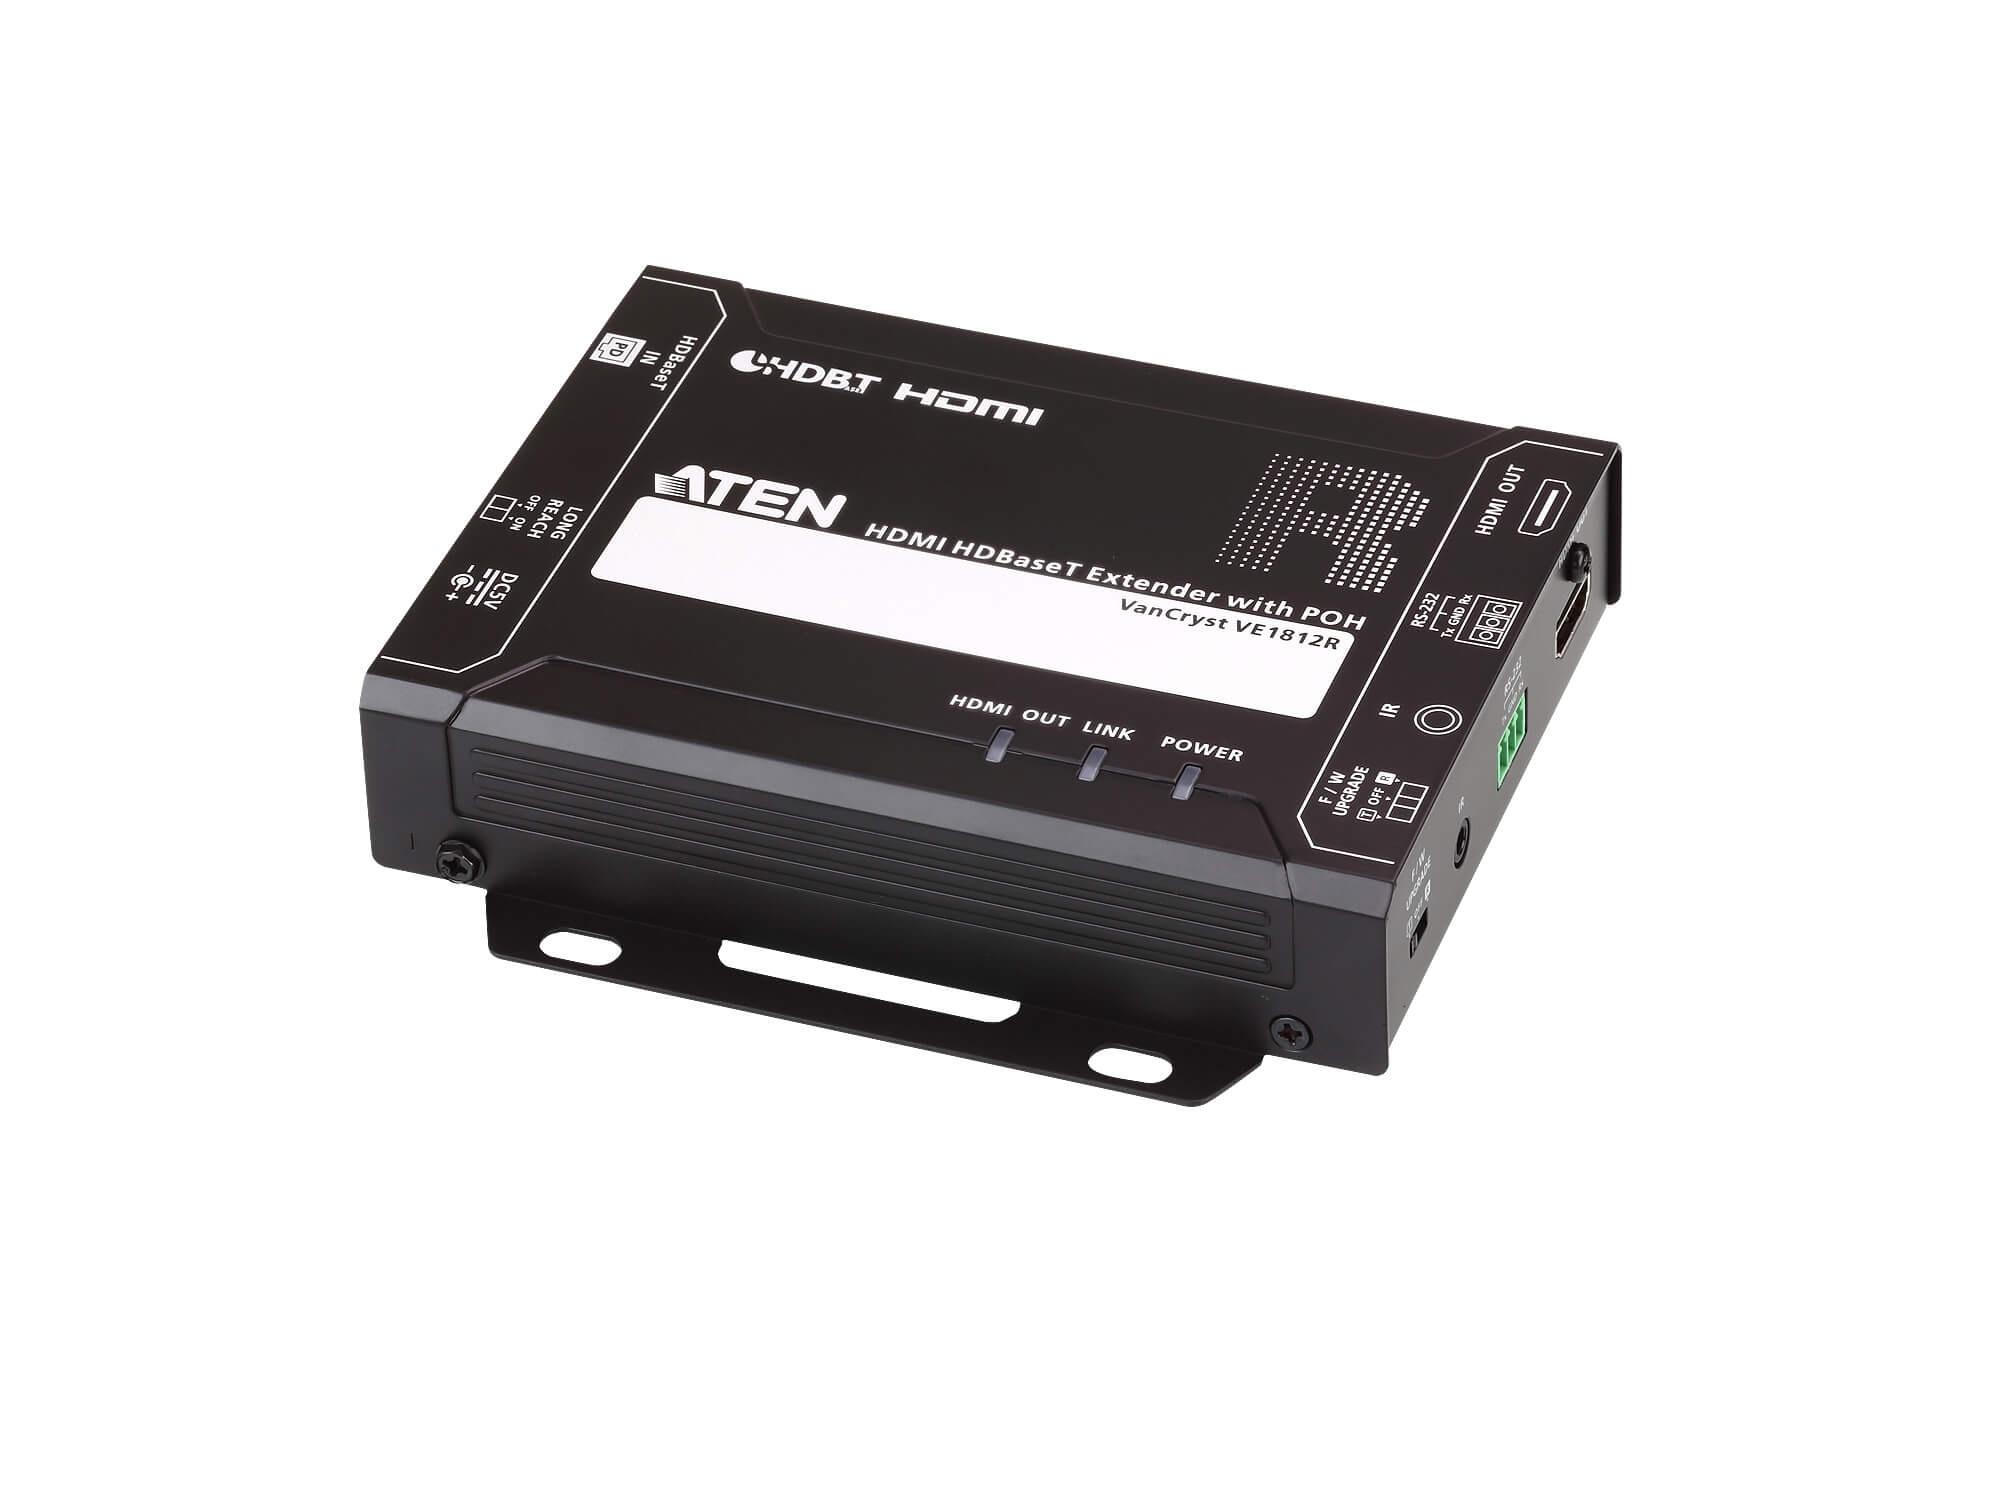 Aten VE1812R HDMI HDBaseT Receiver with POH/4K 100m